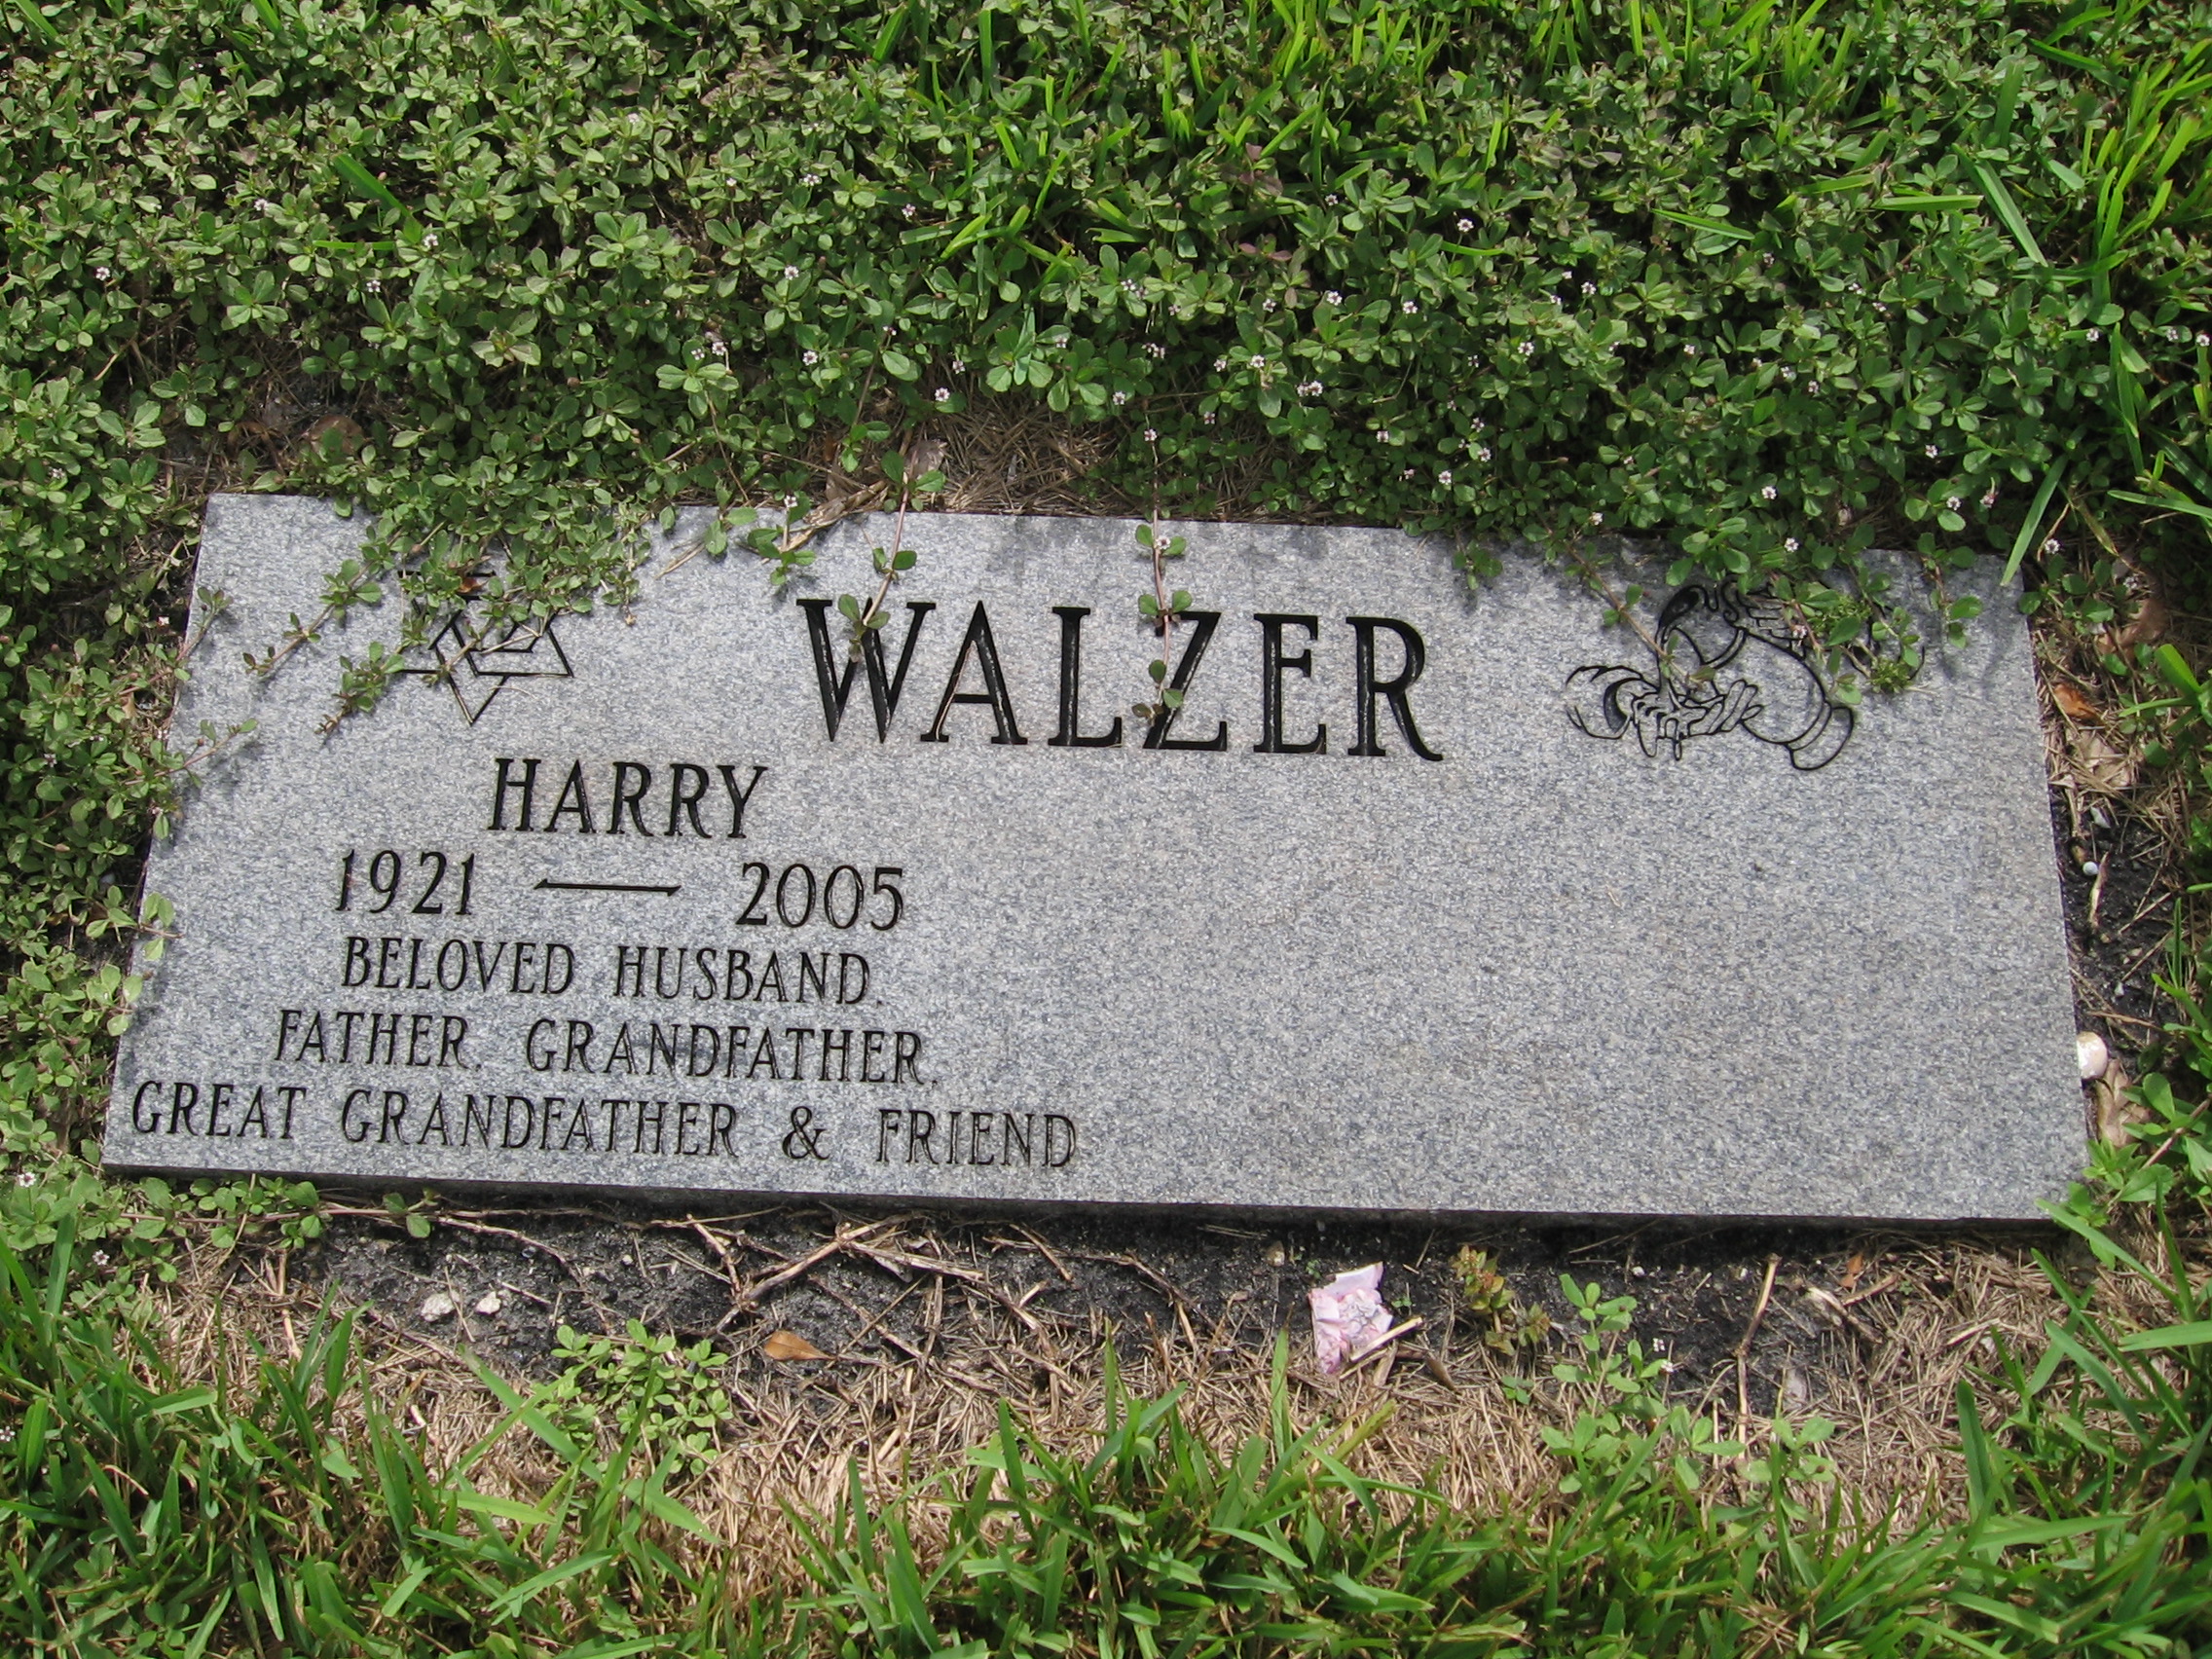 Harry Walzer